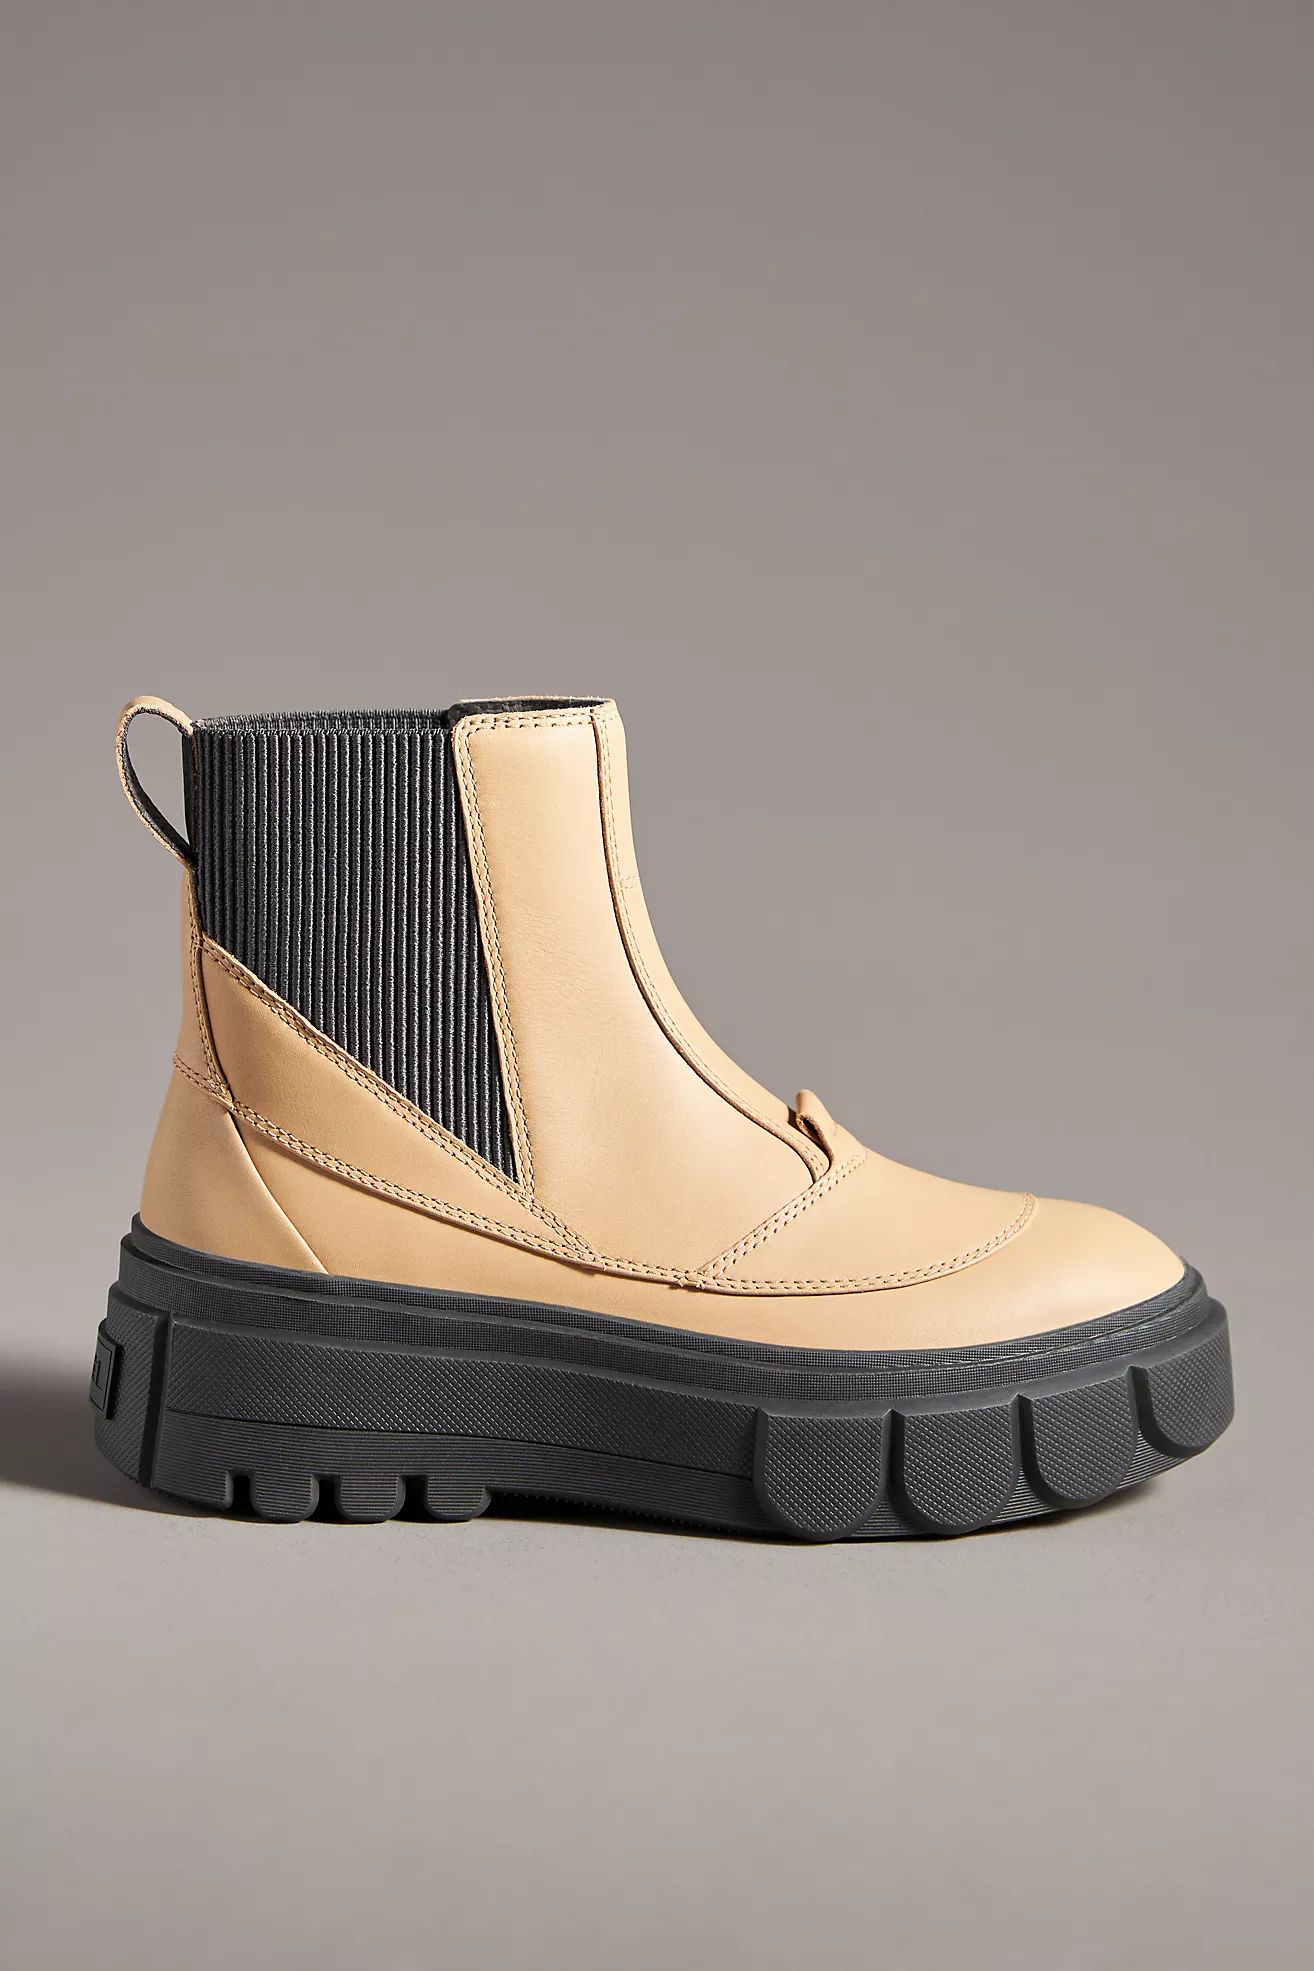 Sorel Caribou Waterproof Boots | Anthropologie (US)